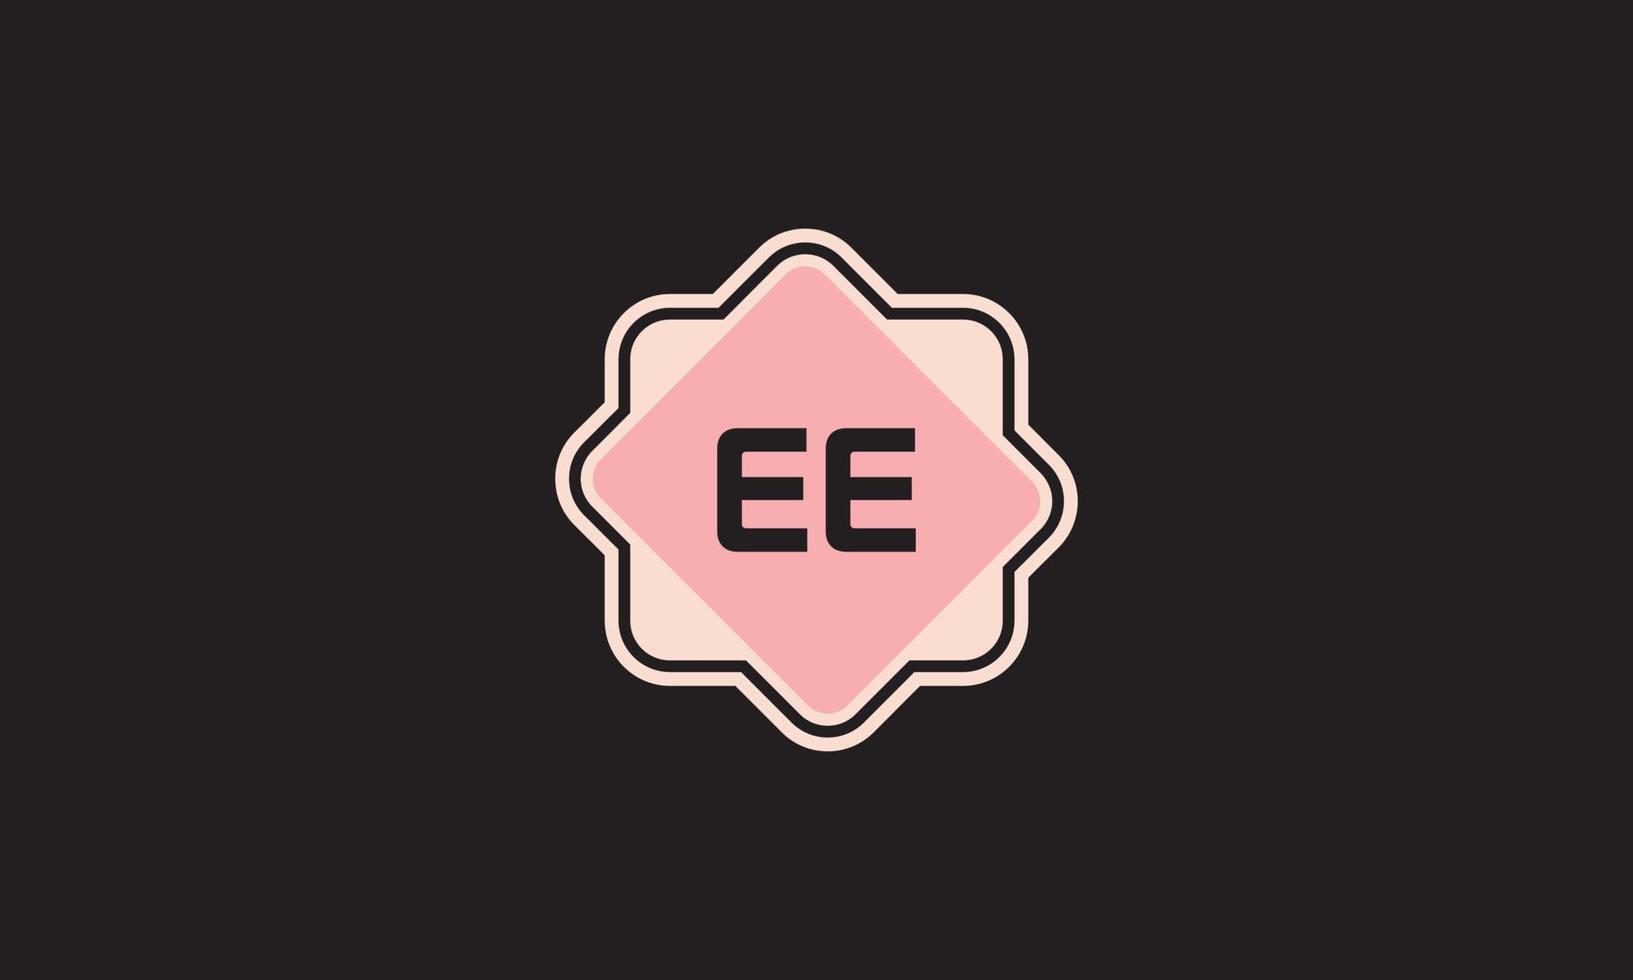 brev ee logotyp med geometrisk former vektor fri vektor mall.